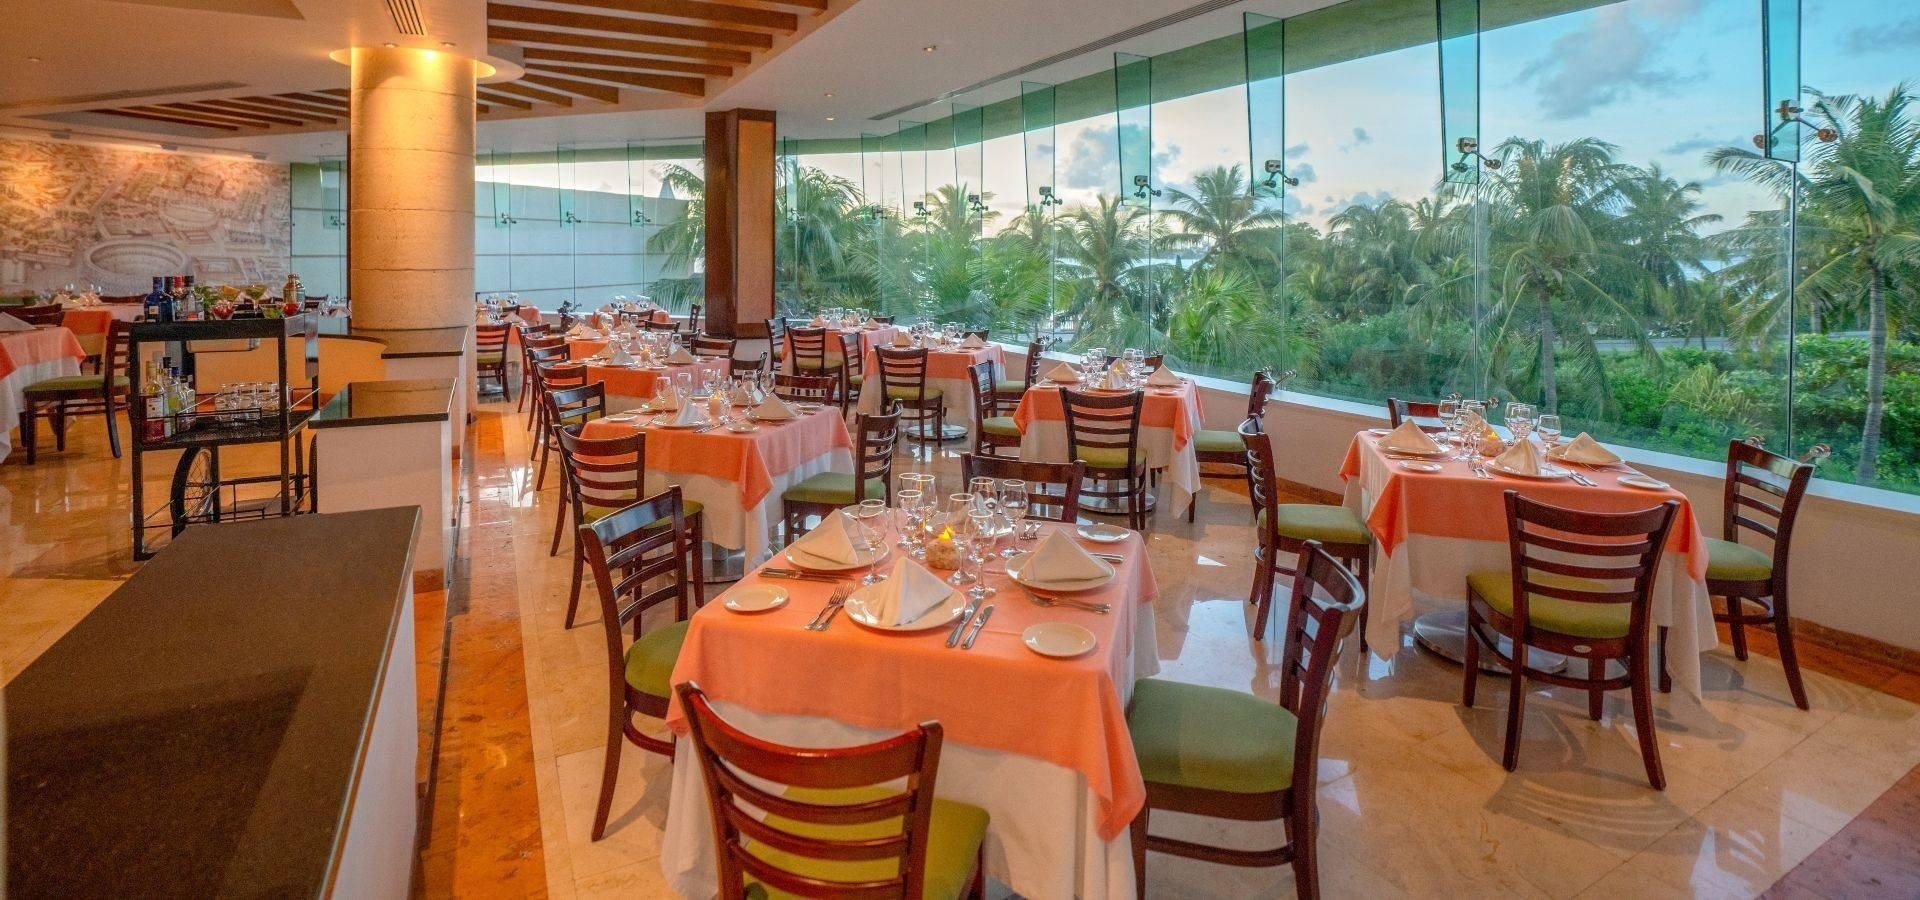 El Mirador Restaurant overlooking the palm tree garden of the Grand Park Royal Cancun Hotel